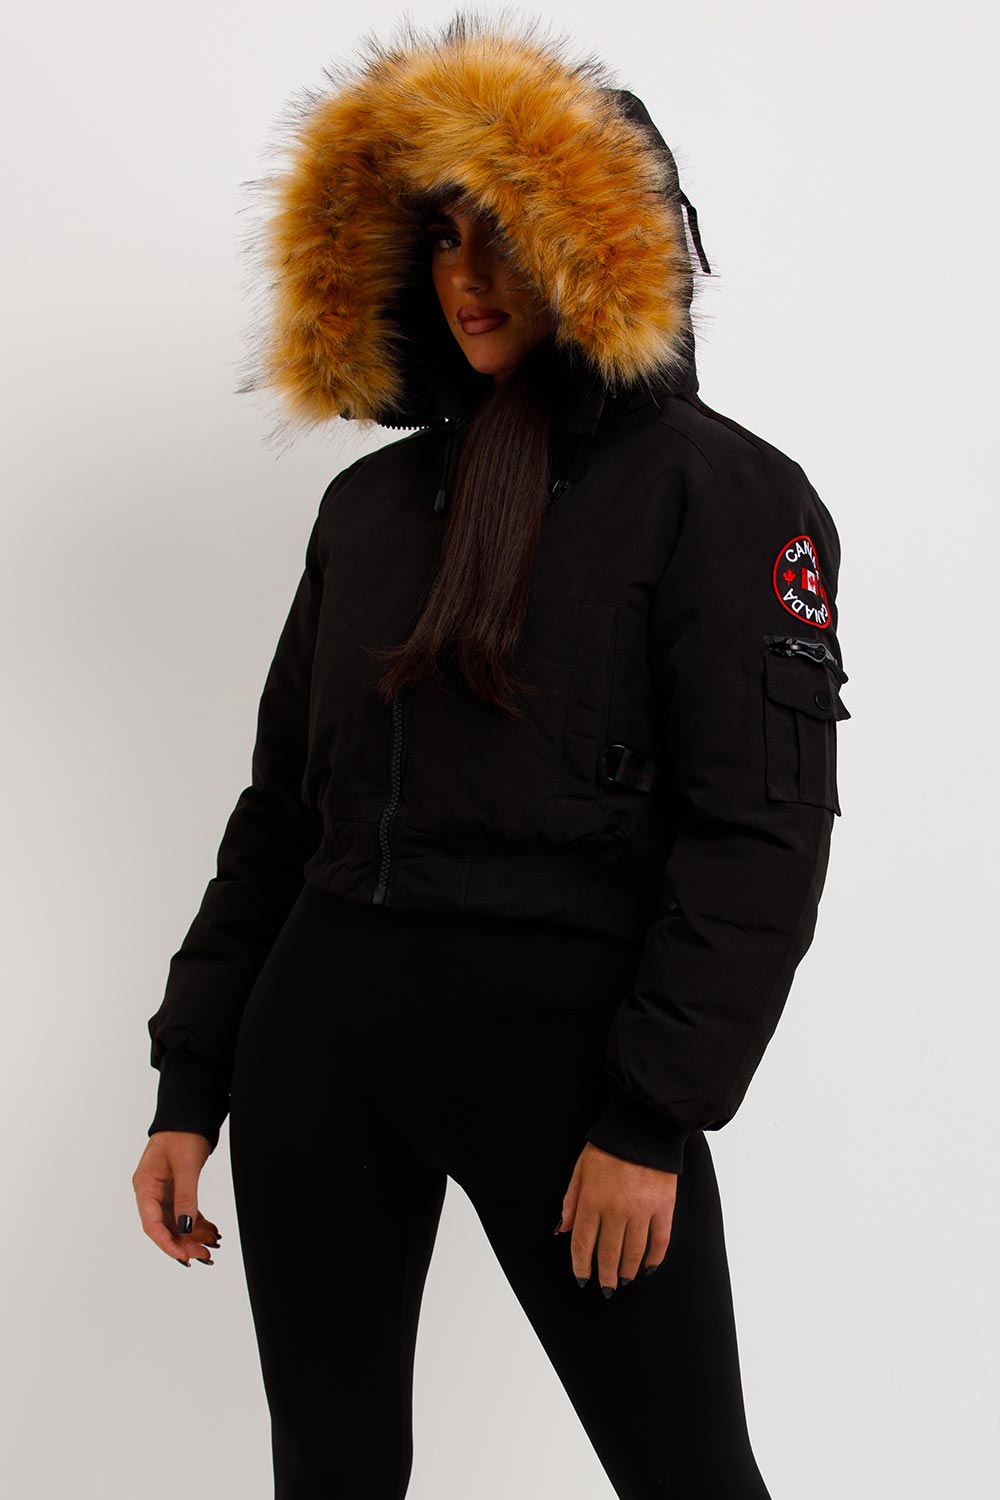 zavetti canada crop bomber jacket with fur hood womens